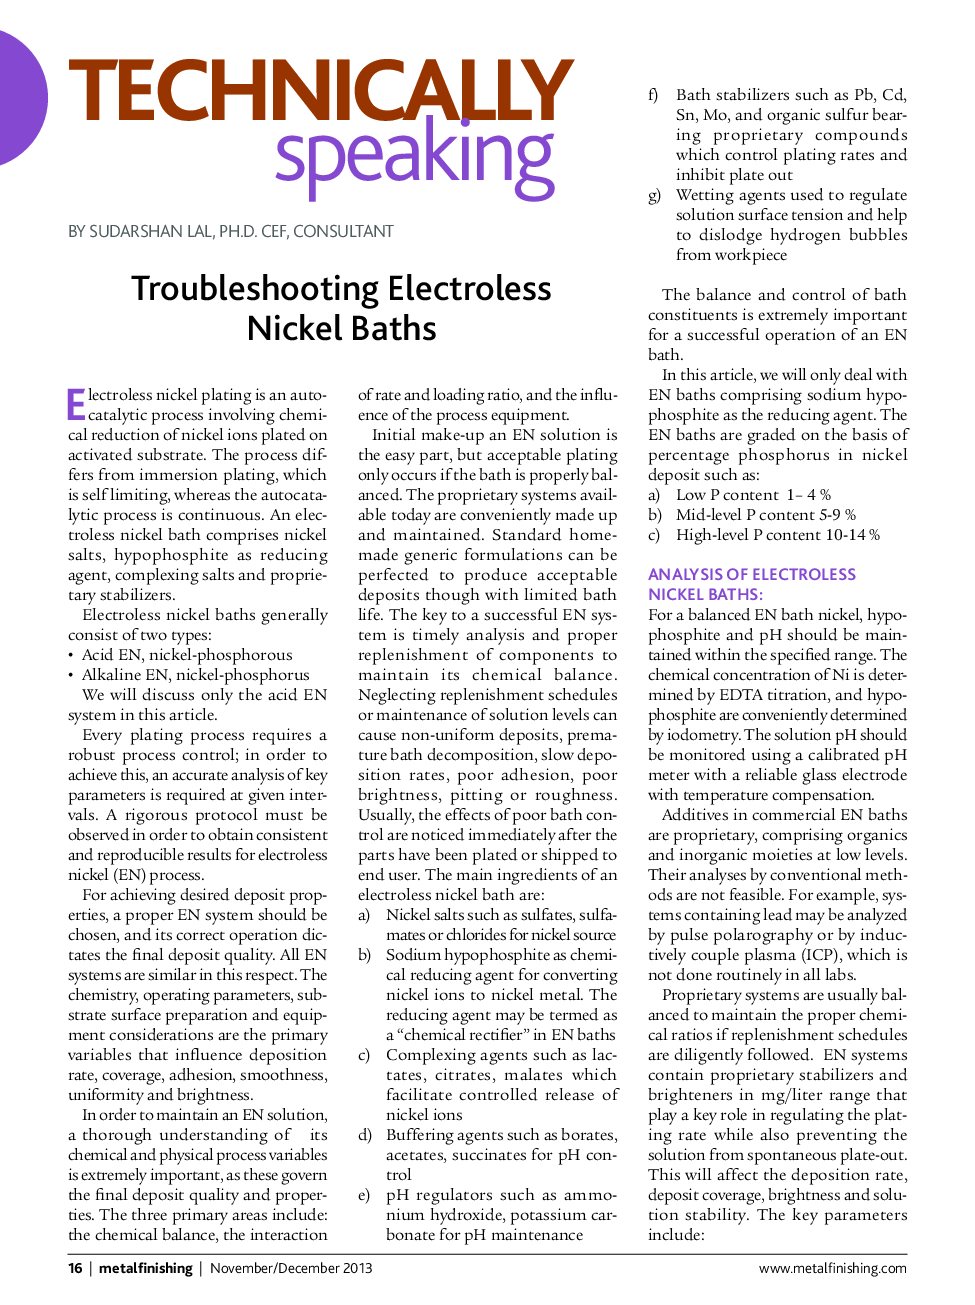 Troubleshooting Electroless Nickel Baths